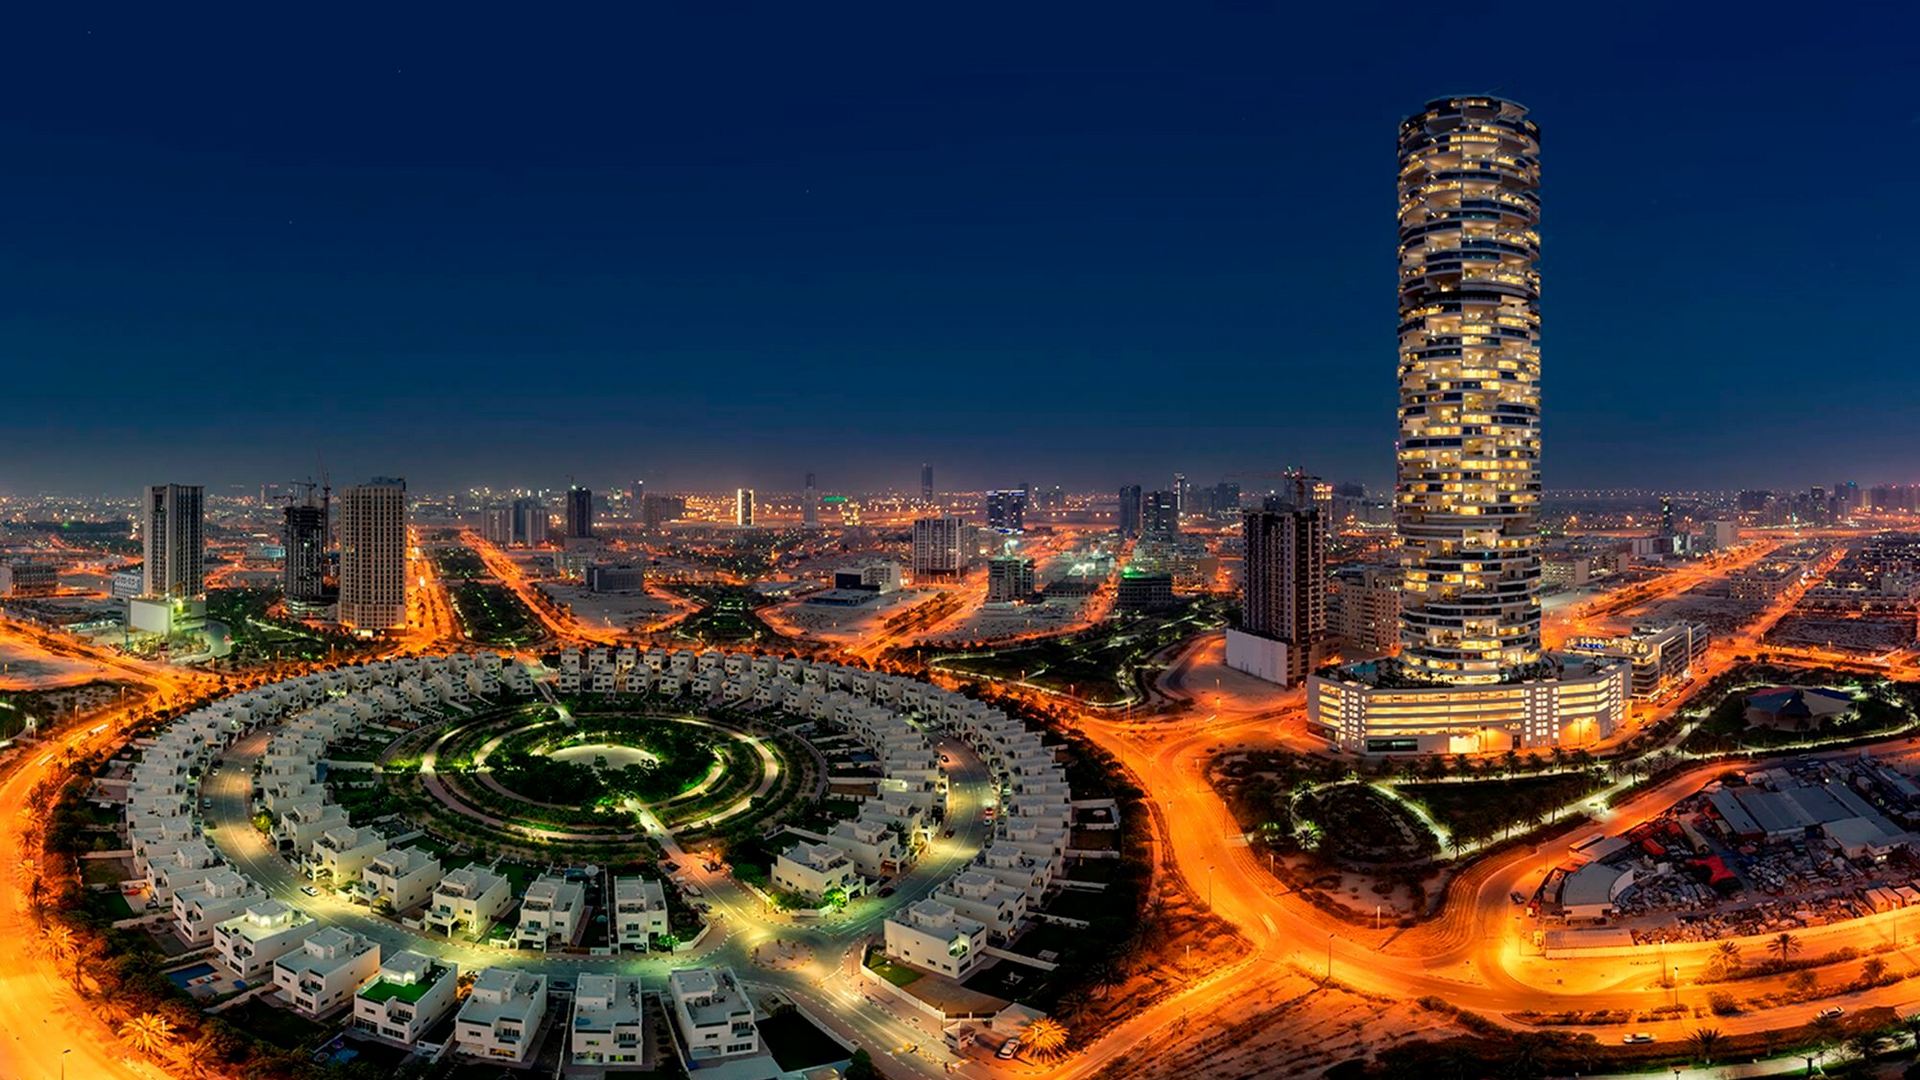 AURA BY GROVY by Grovy Real Estate Development Llc in Jumeirah Village Circle, Dubai, UAE - 2